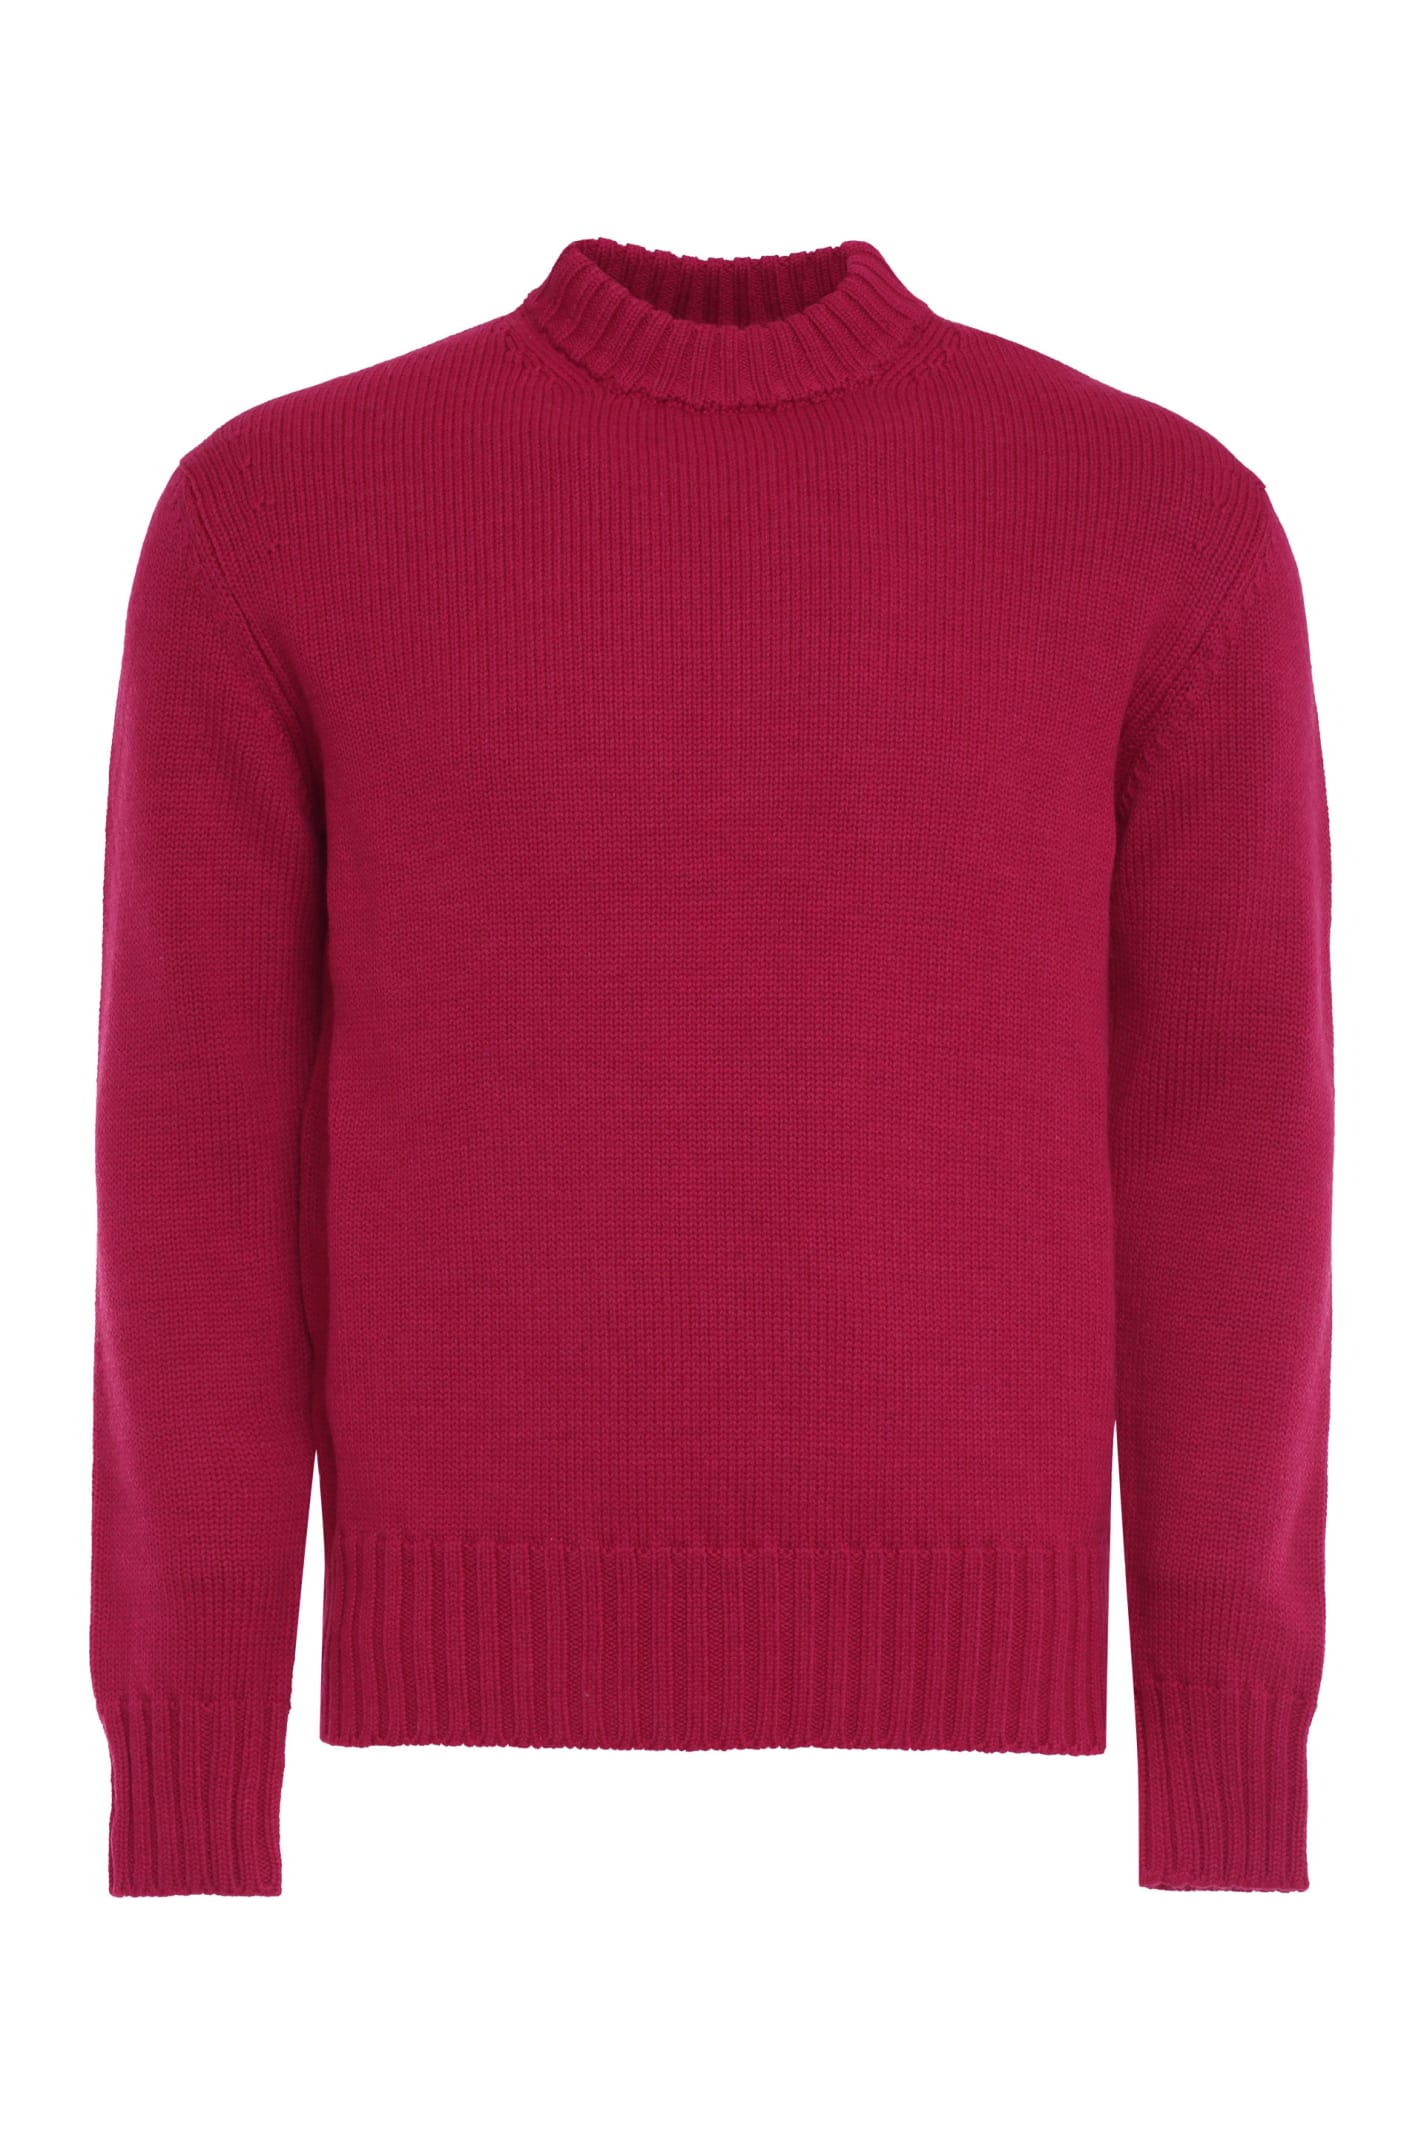 Piacenza Cashmere Virgin Wool Sweater